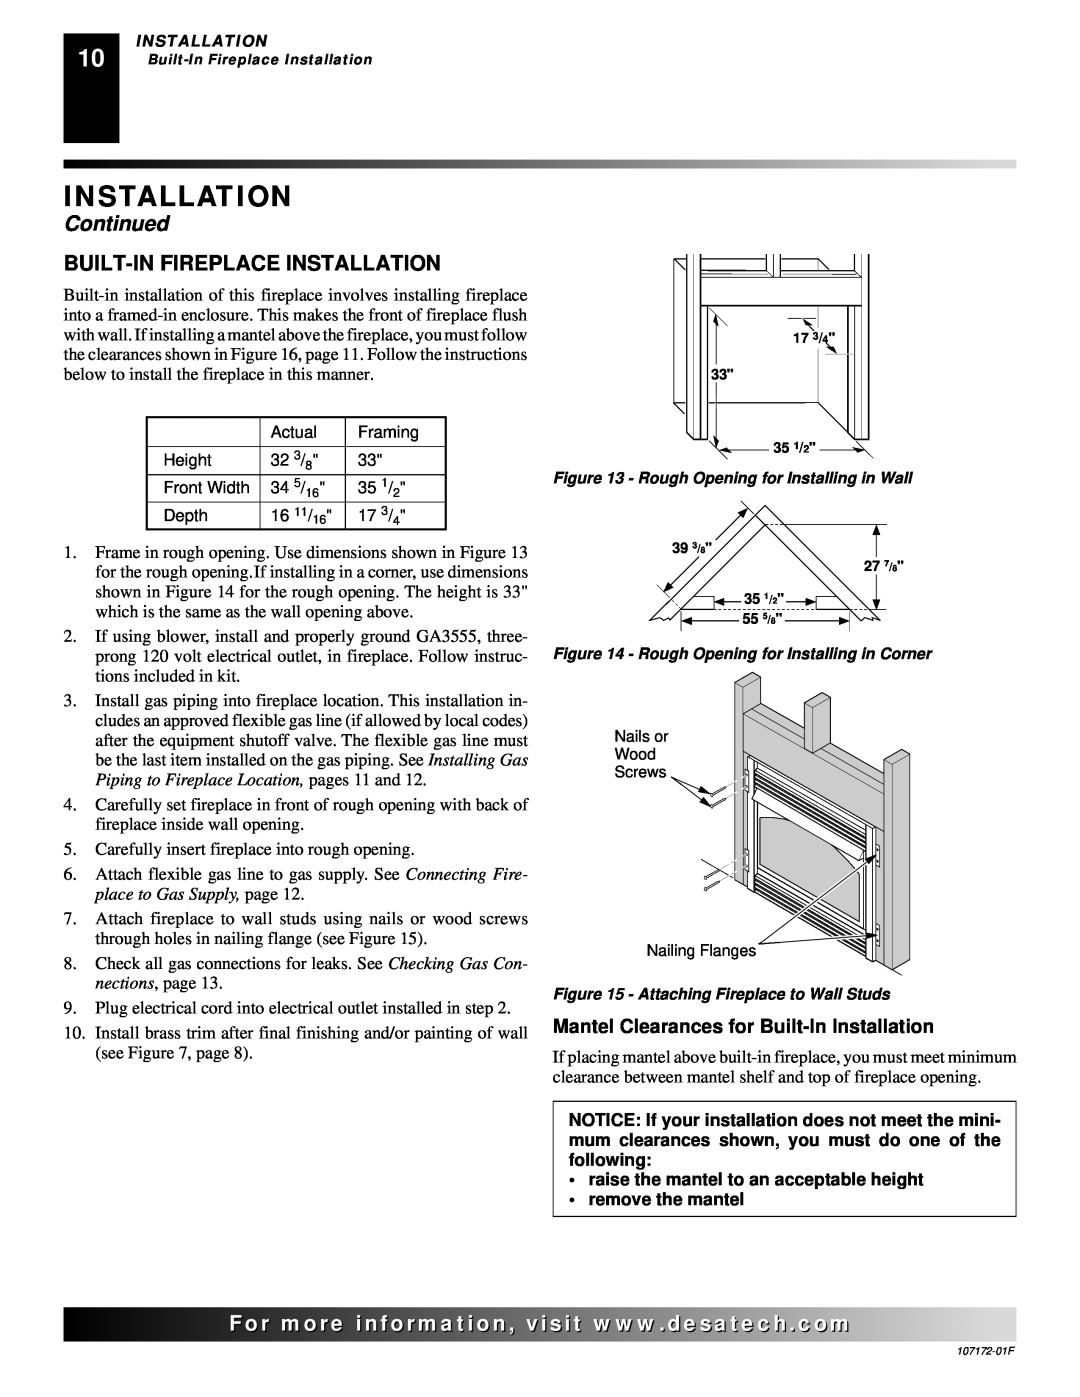 Desa EFS33PR installation manual Built-Infireplace Installation, Mantel Clearances for Built-InInstallation, Continued 